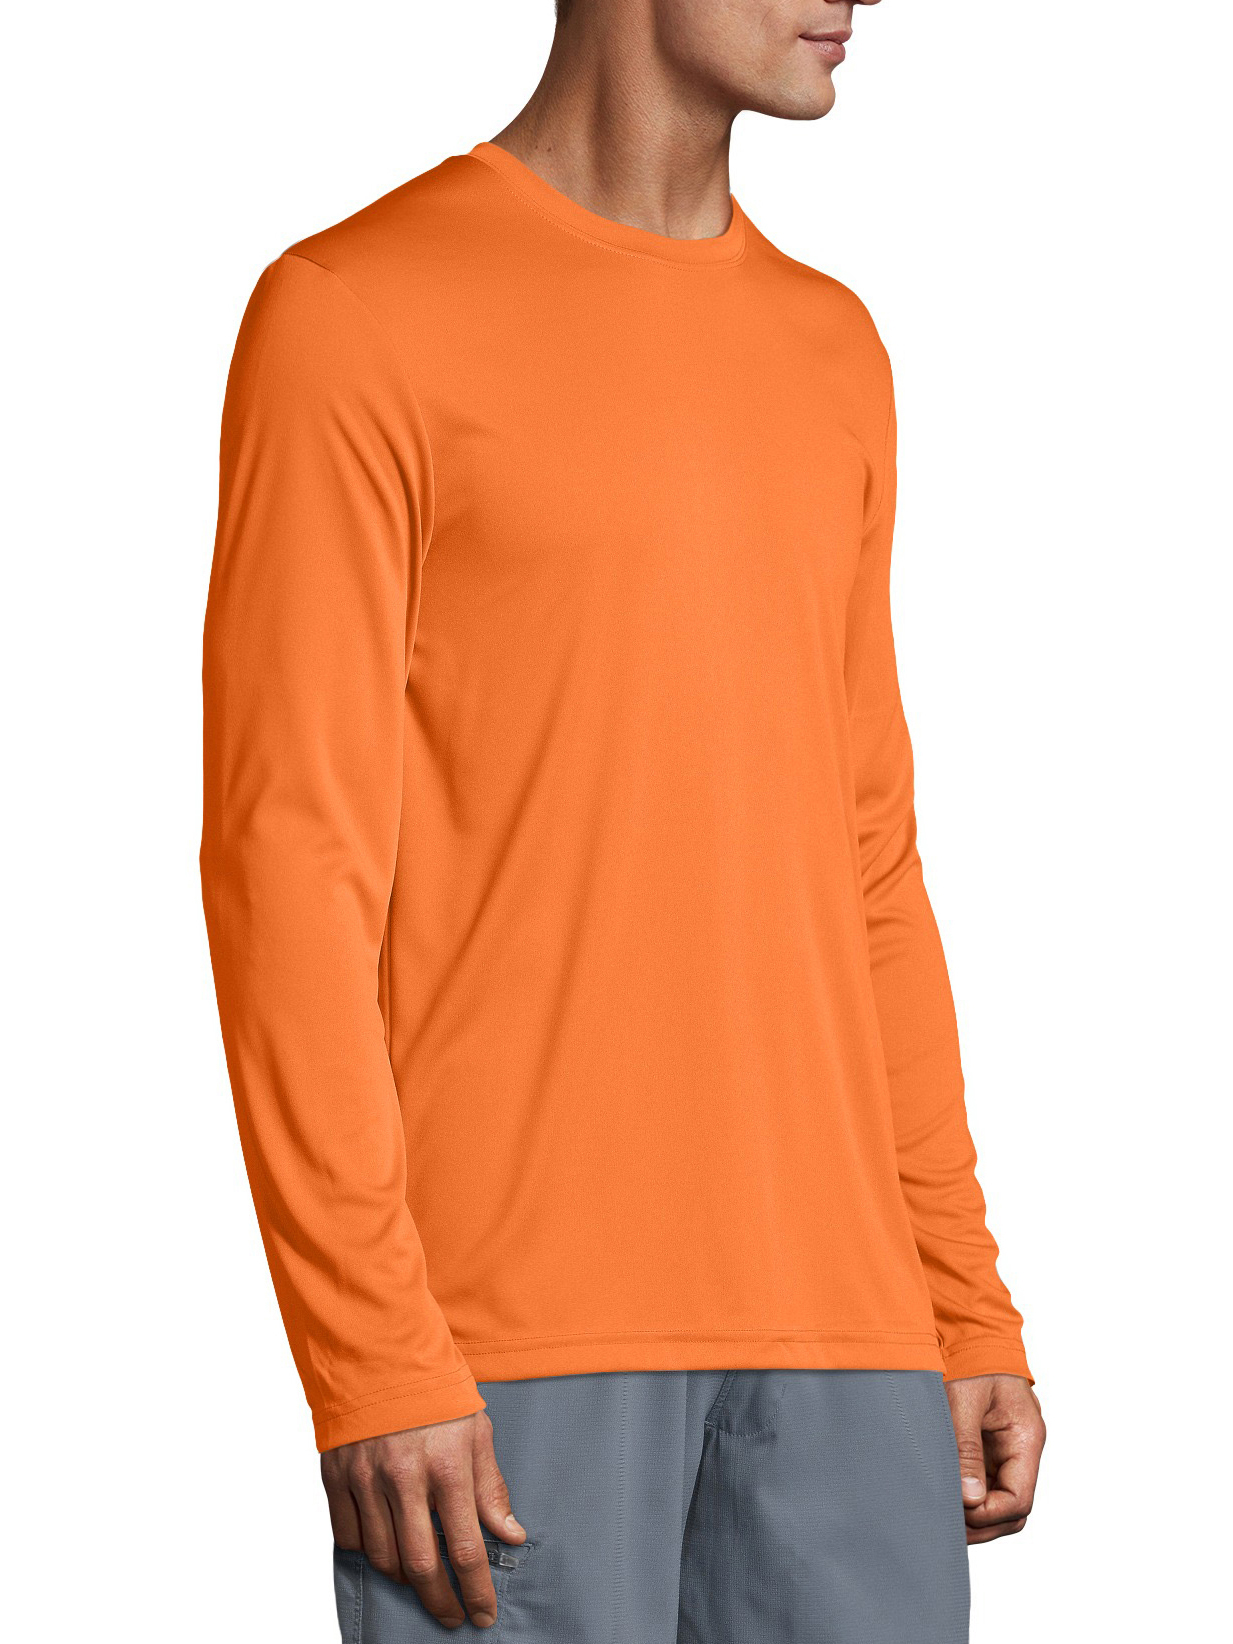 Hanes Cool DRI Performance Long-Sleeve T-Shirt (482L) Safety Orange, M - image 5 of 7